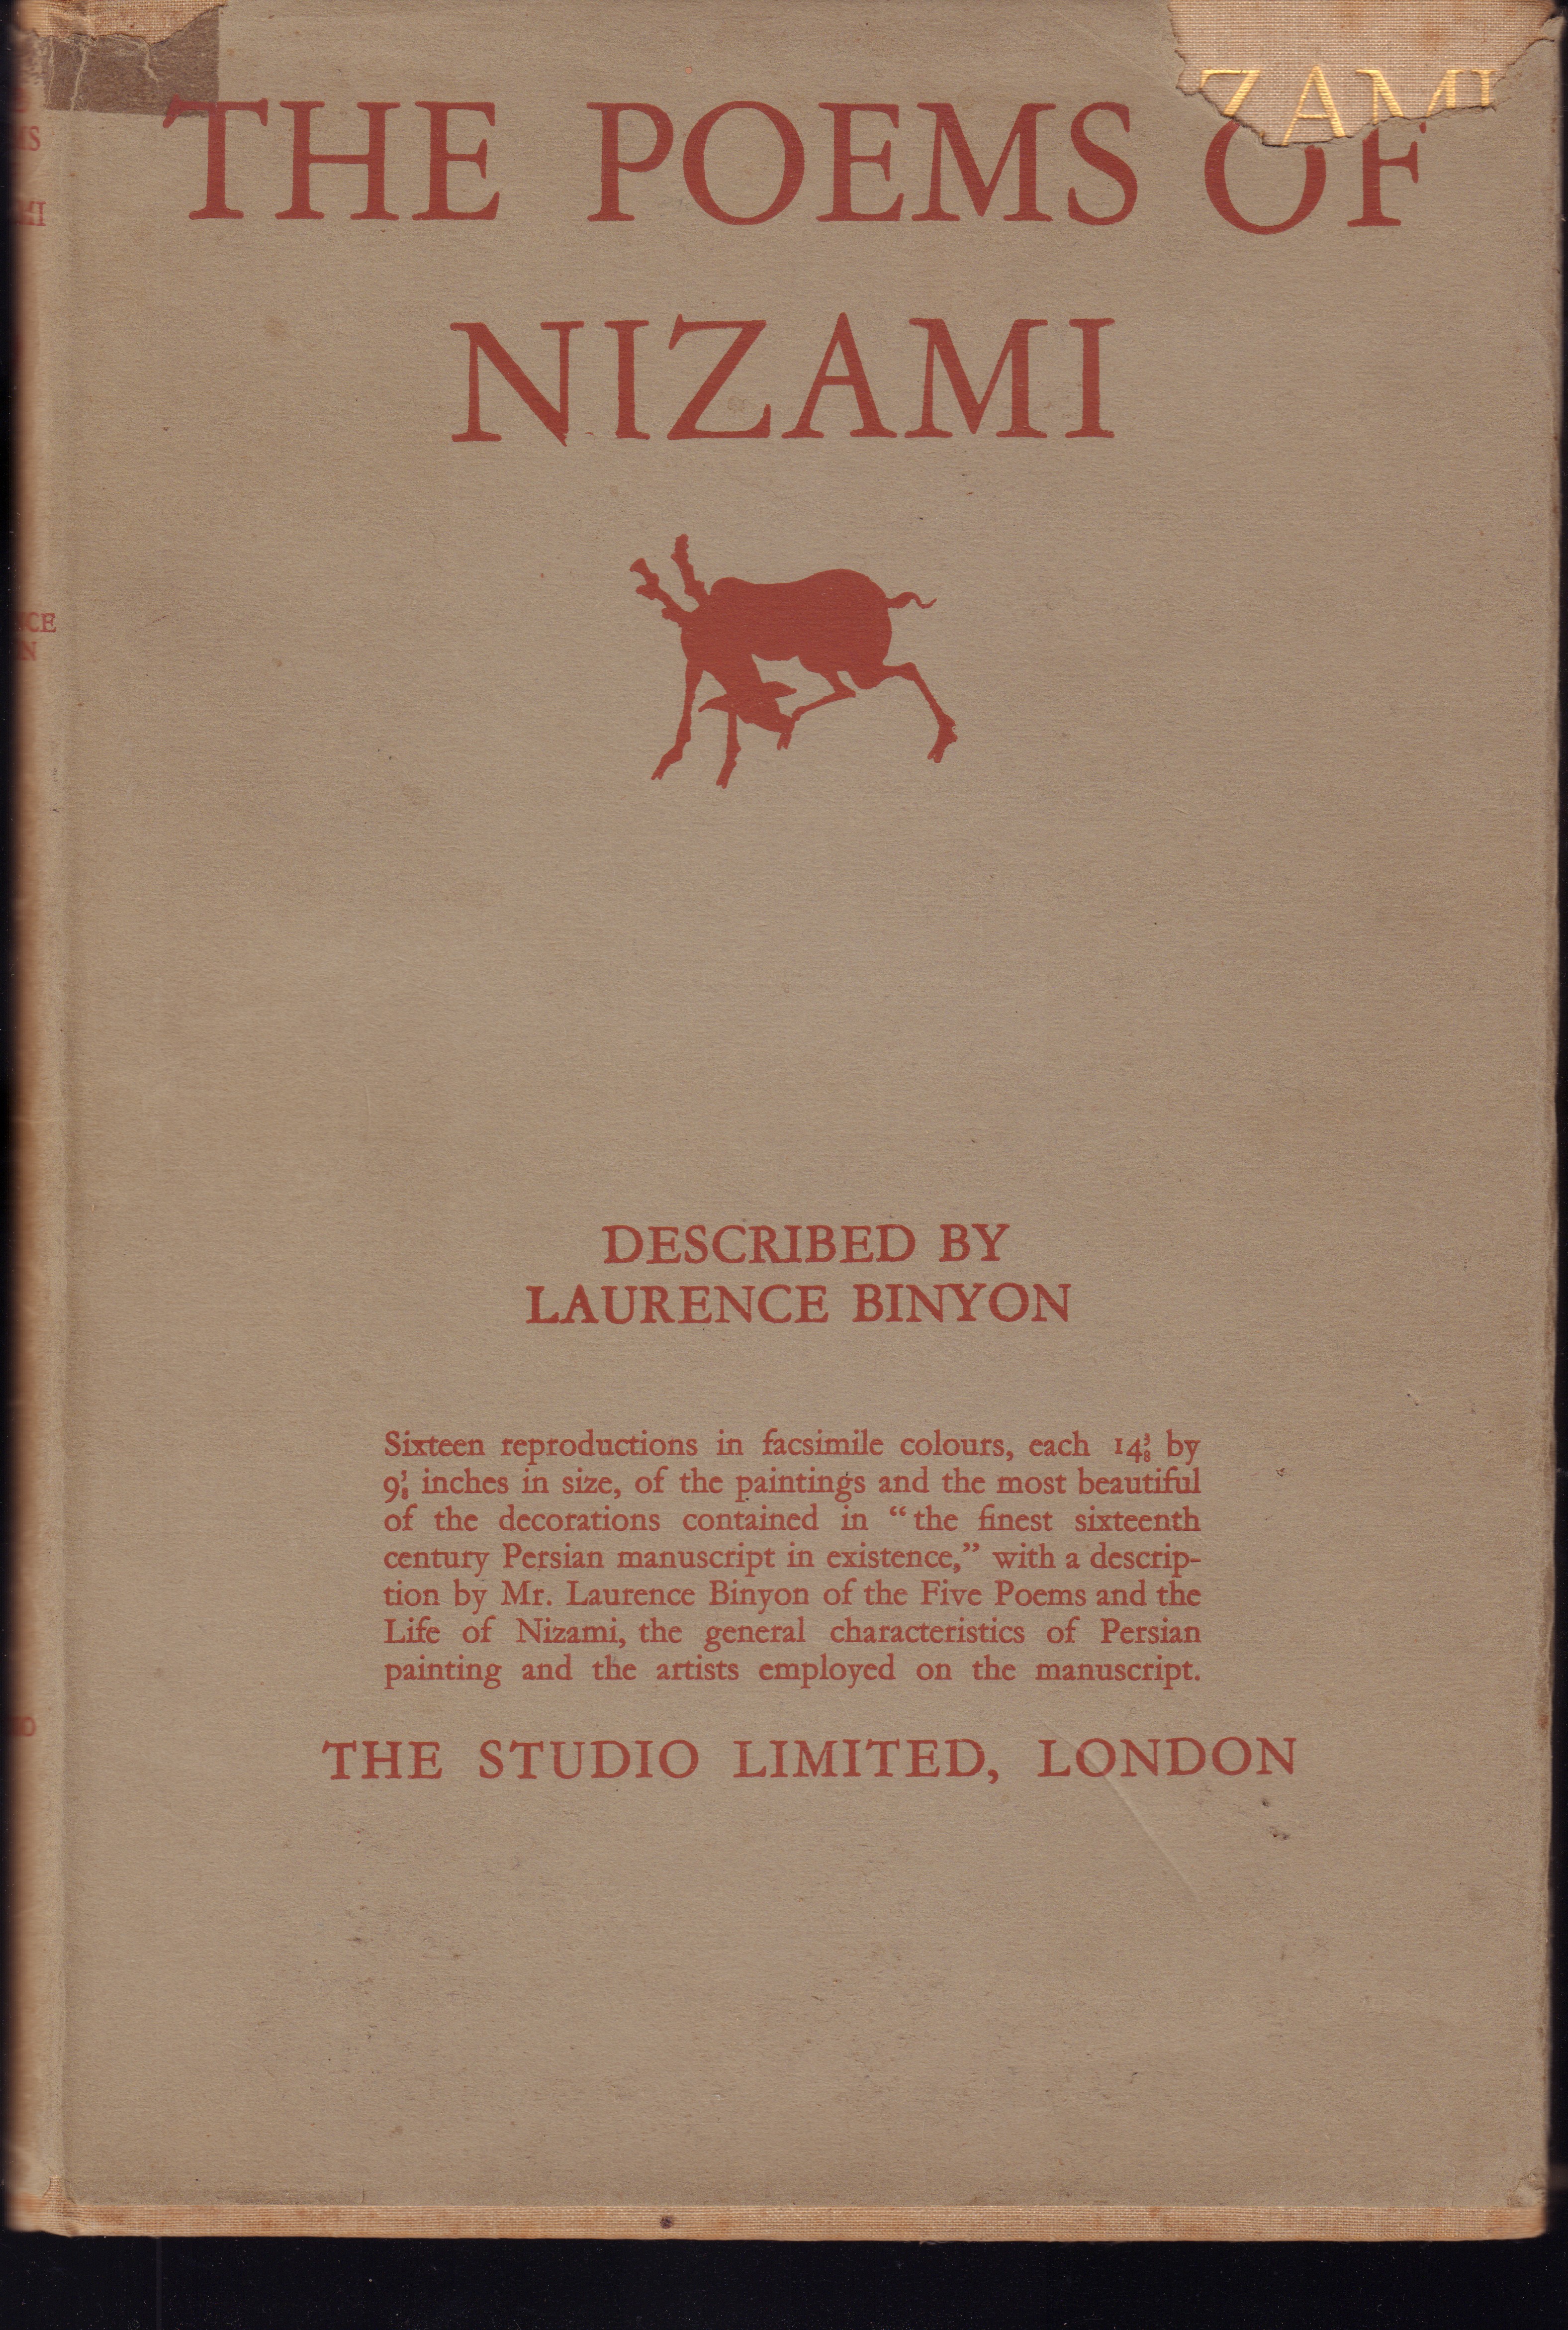 The poems of Nizami